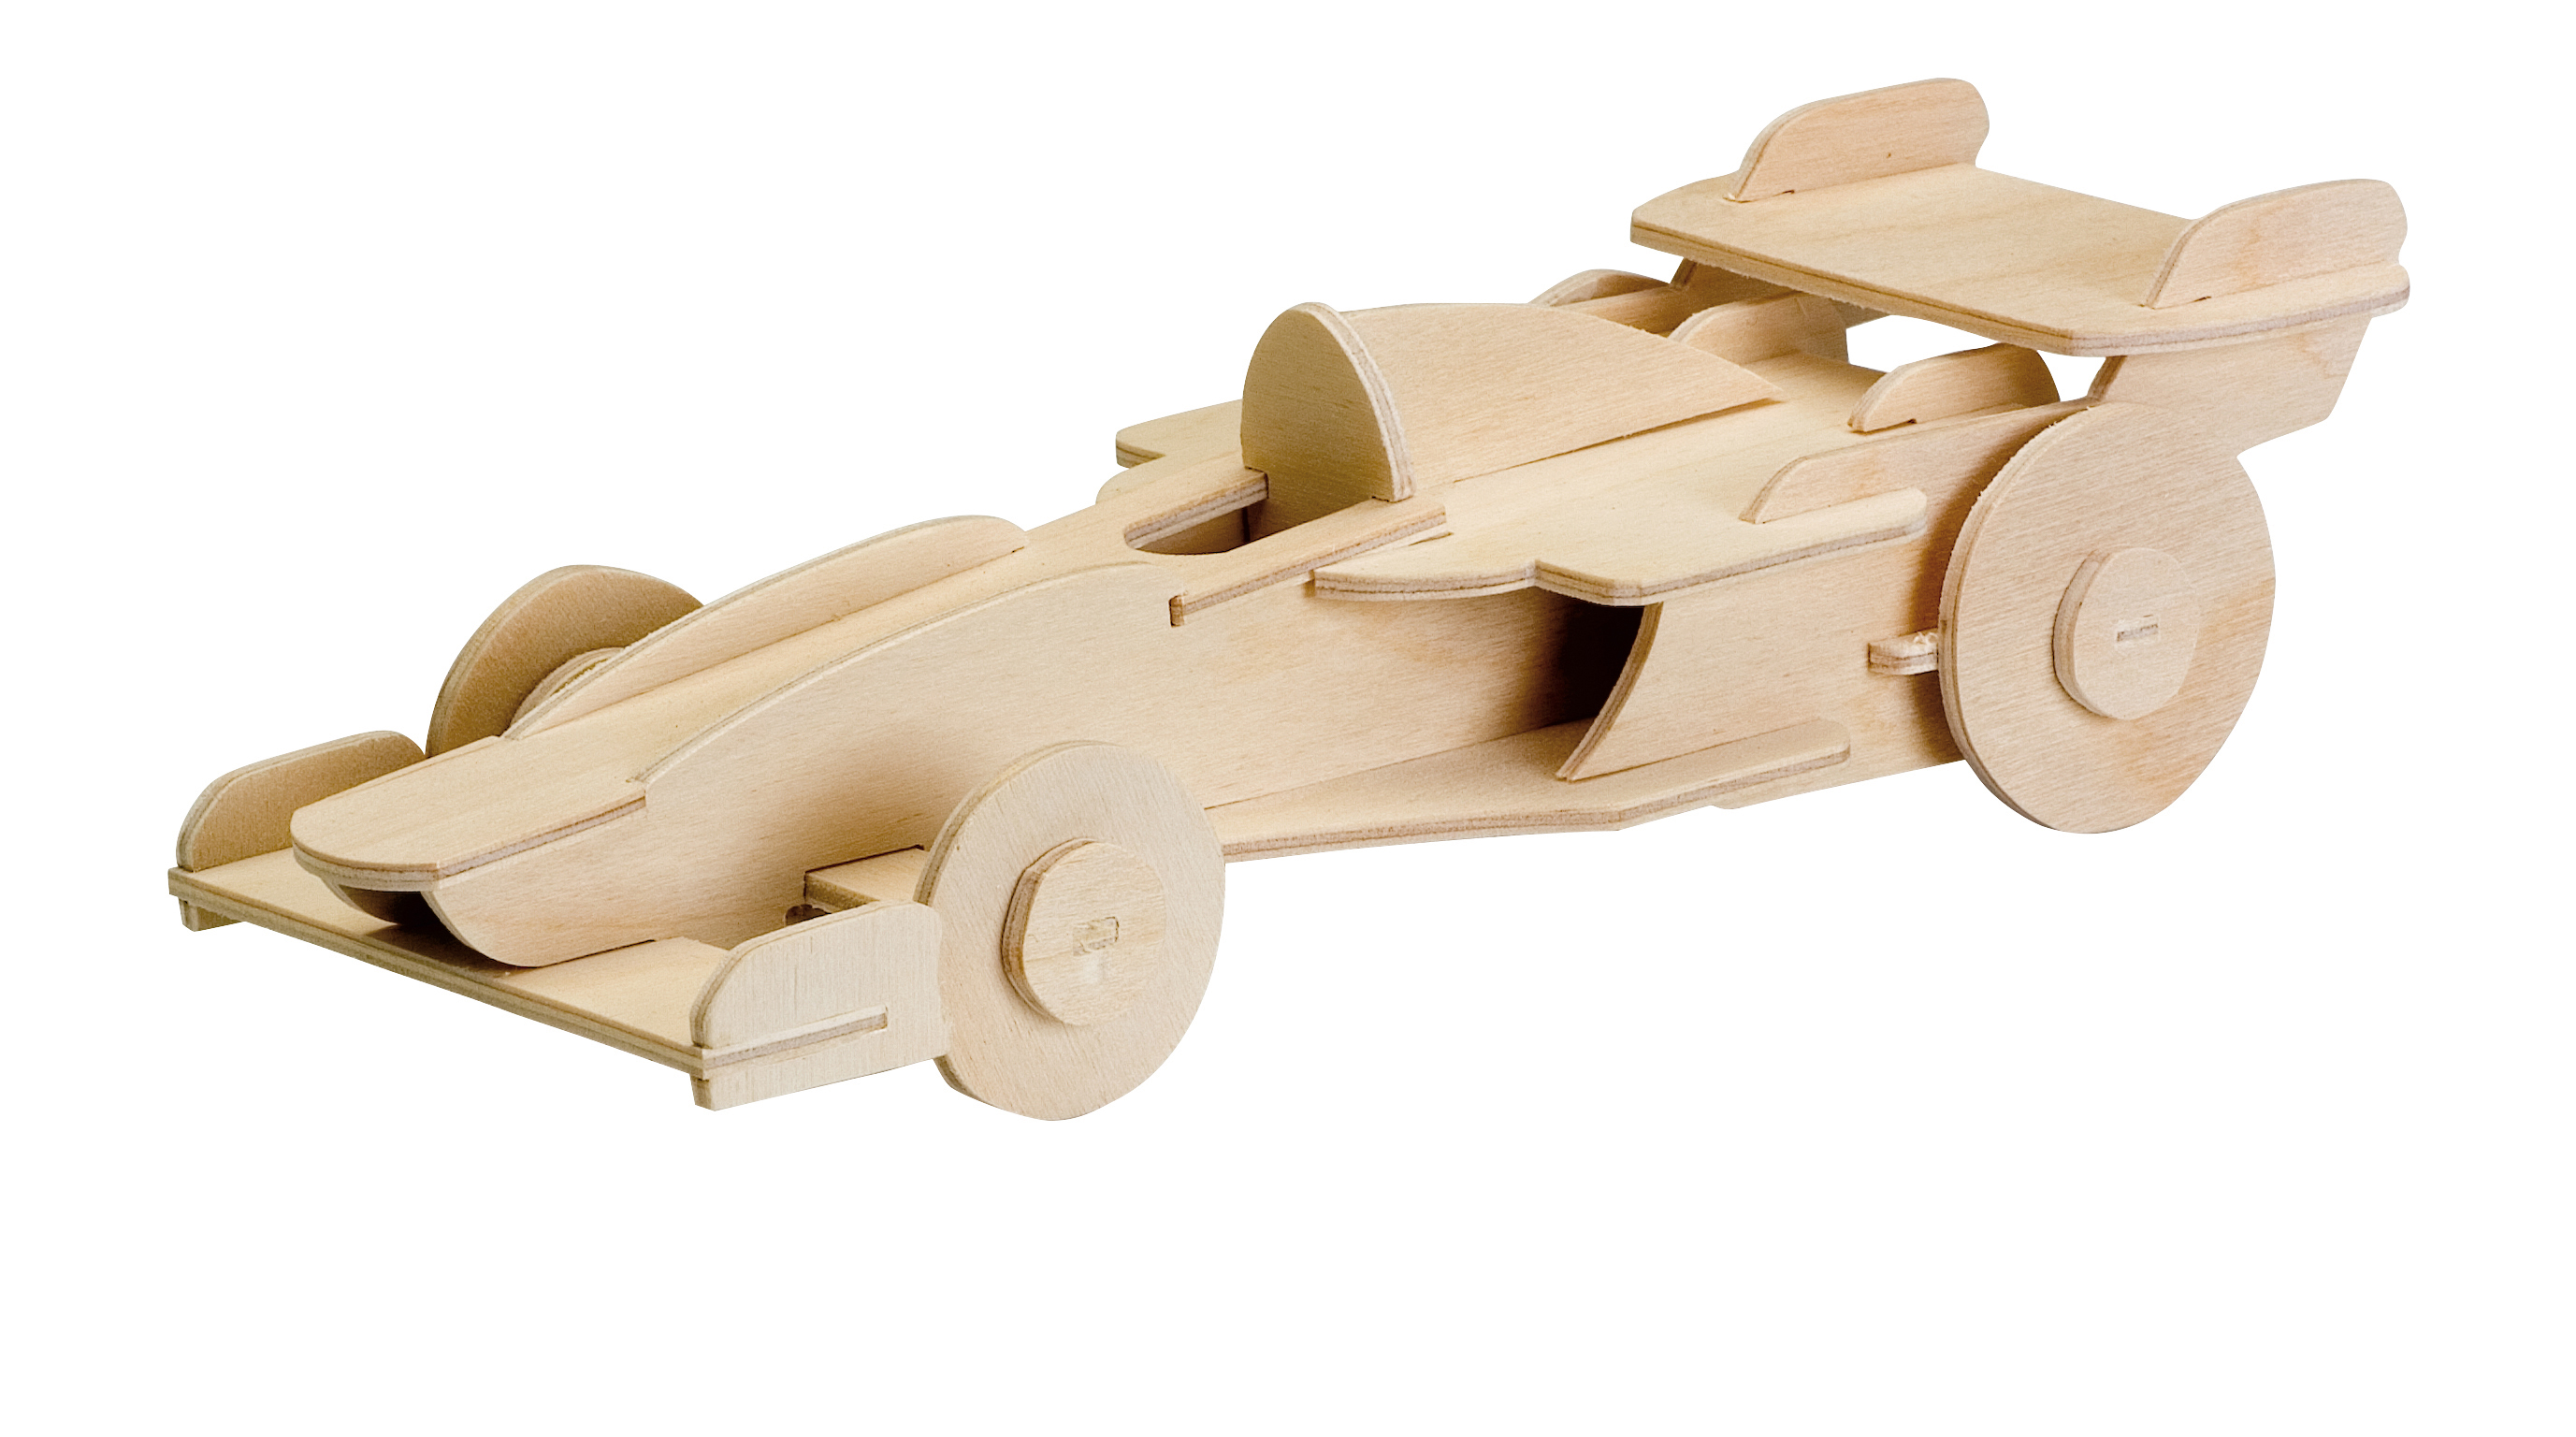 Kan niet vacuüm maïs Houten bouwpakket / 3D puzzel formule 1 raceauto kopen? | LTC Leiden